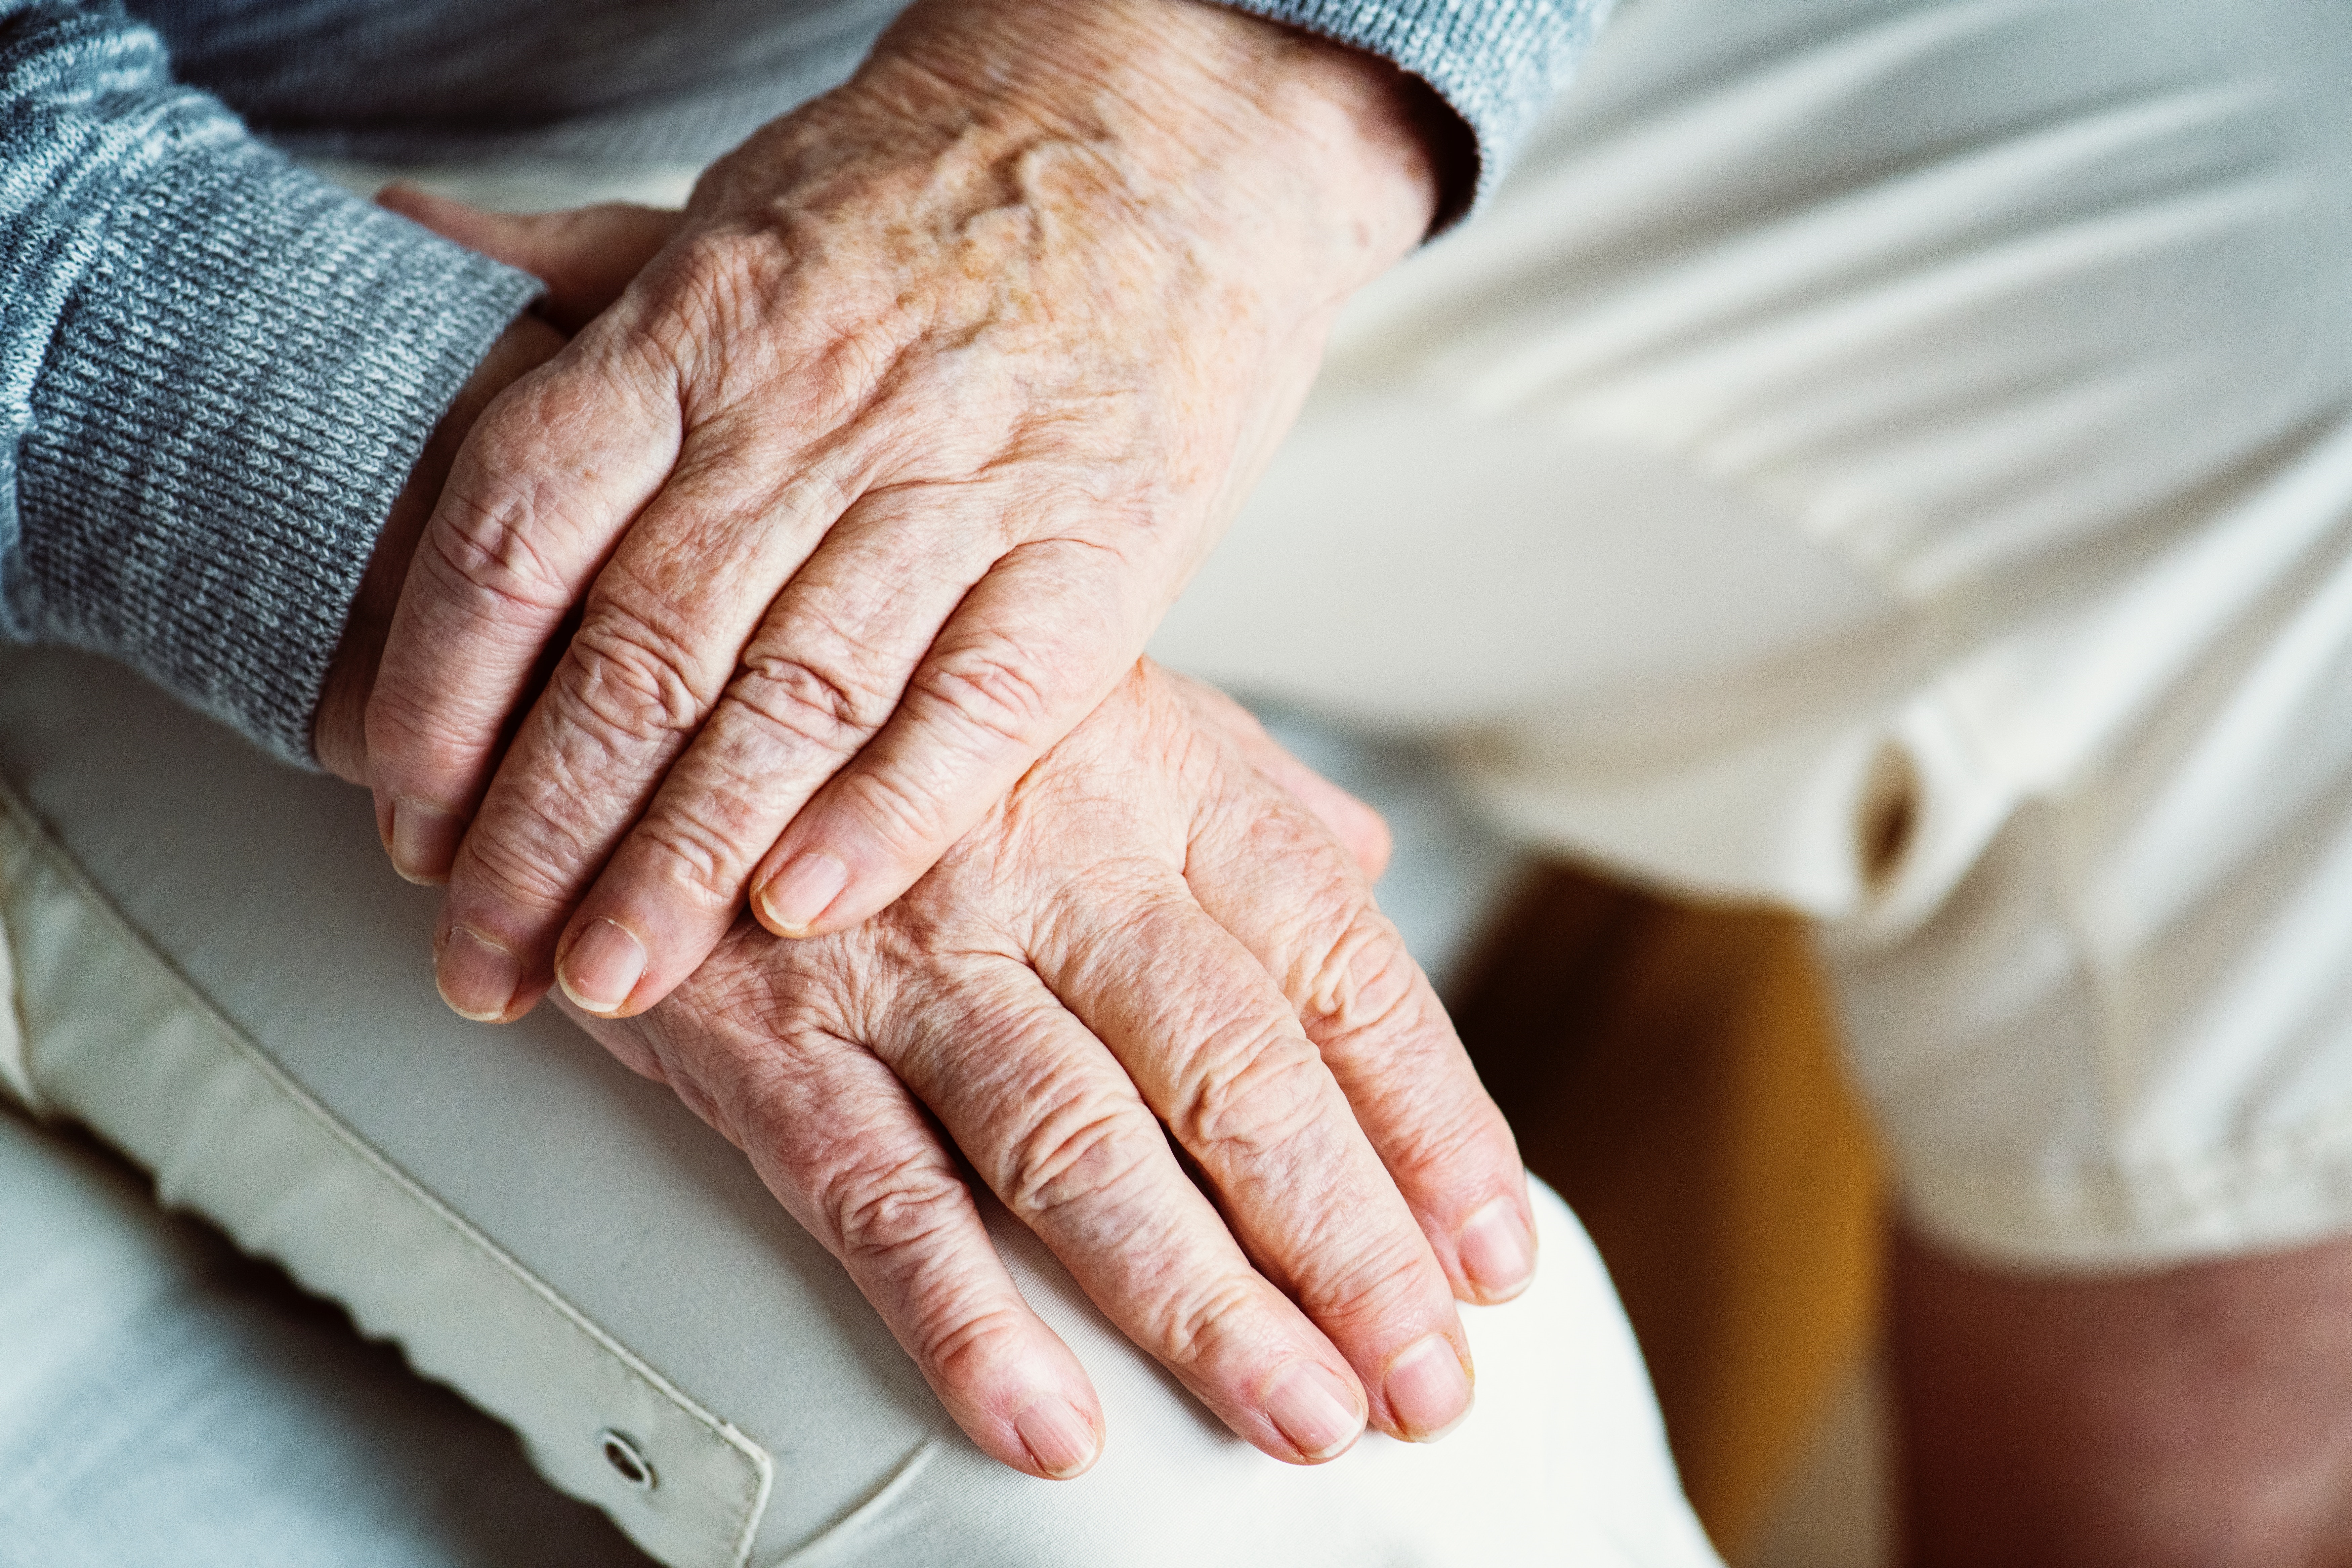 elderly person hands on lap rawpixel-769305-unsplash.jpg